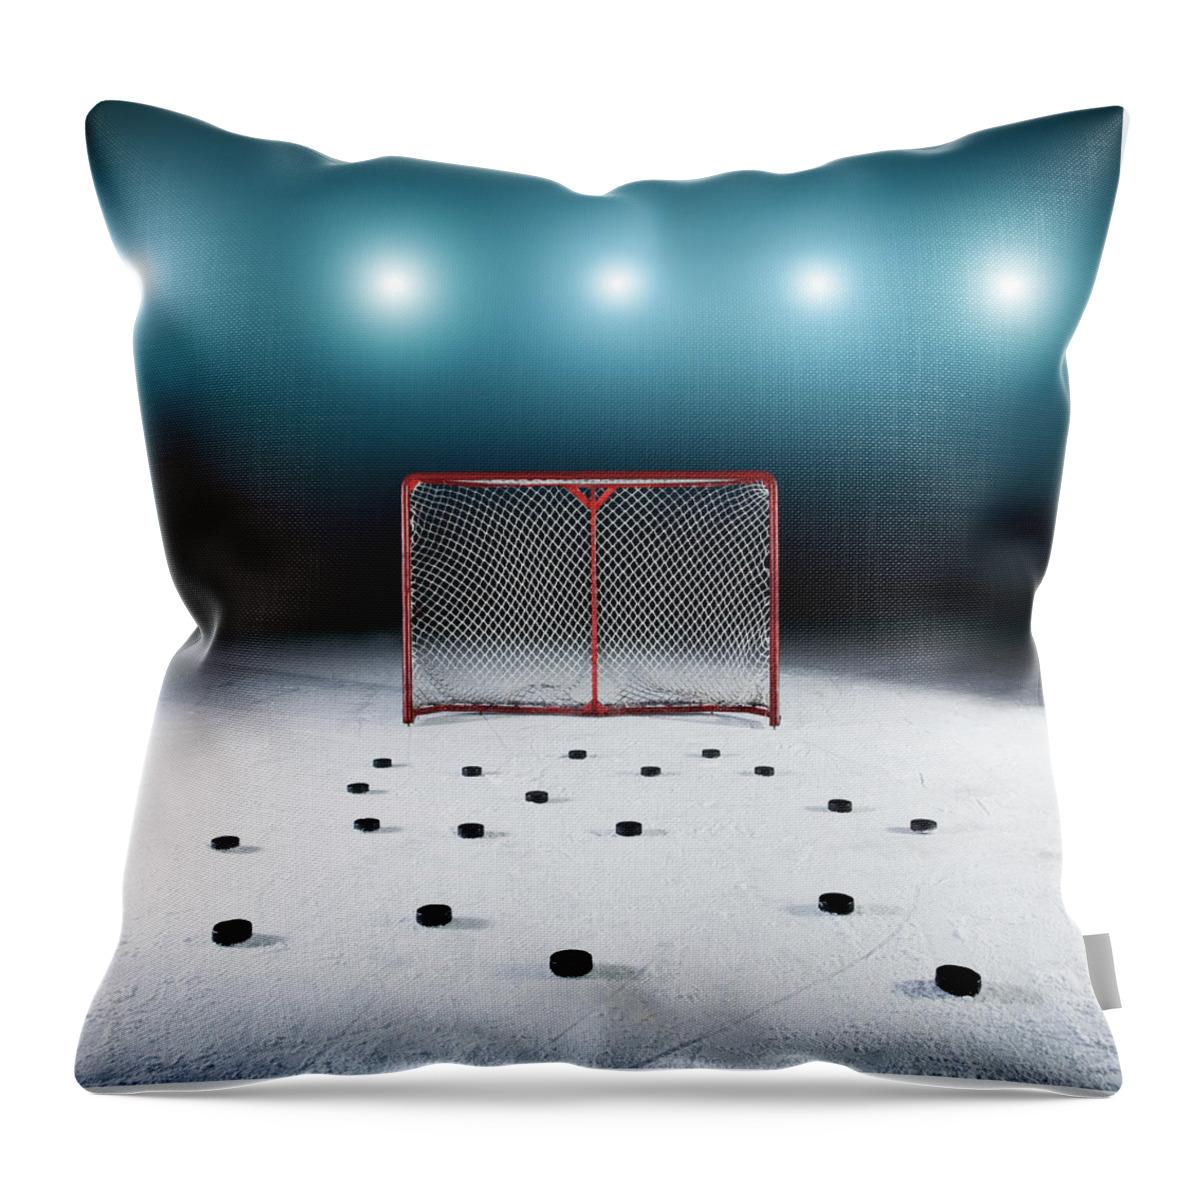 Hockey Pillow